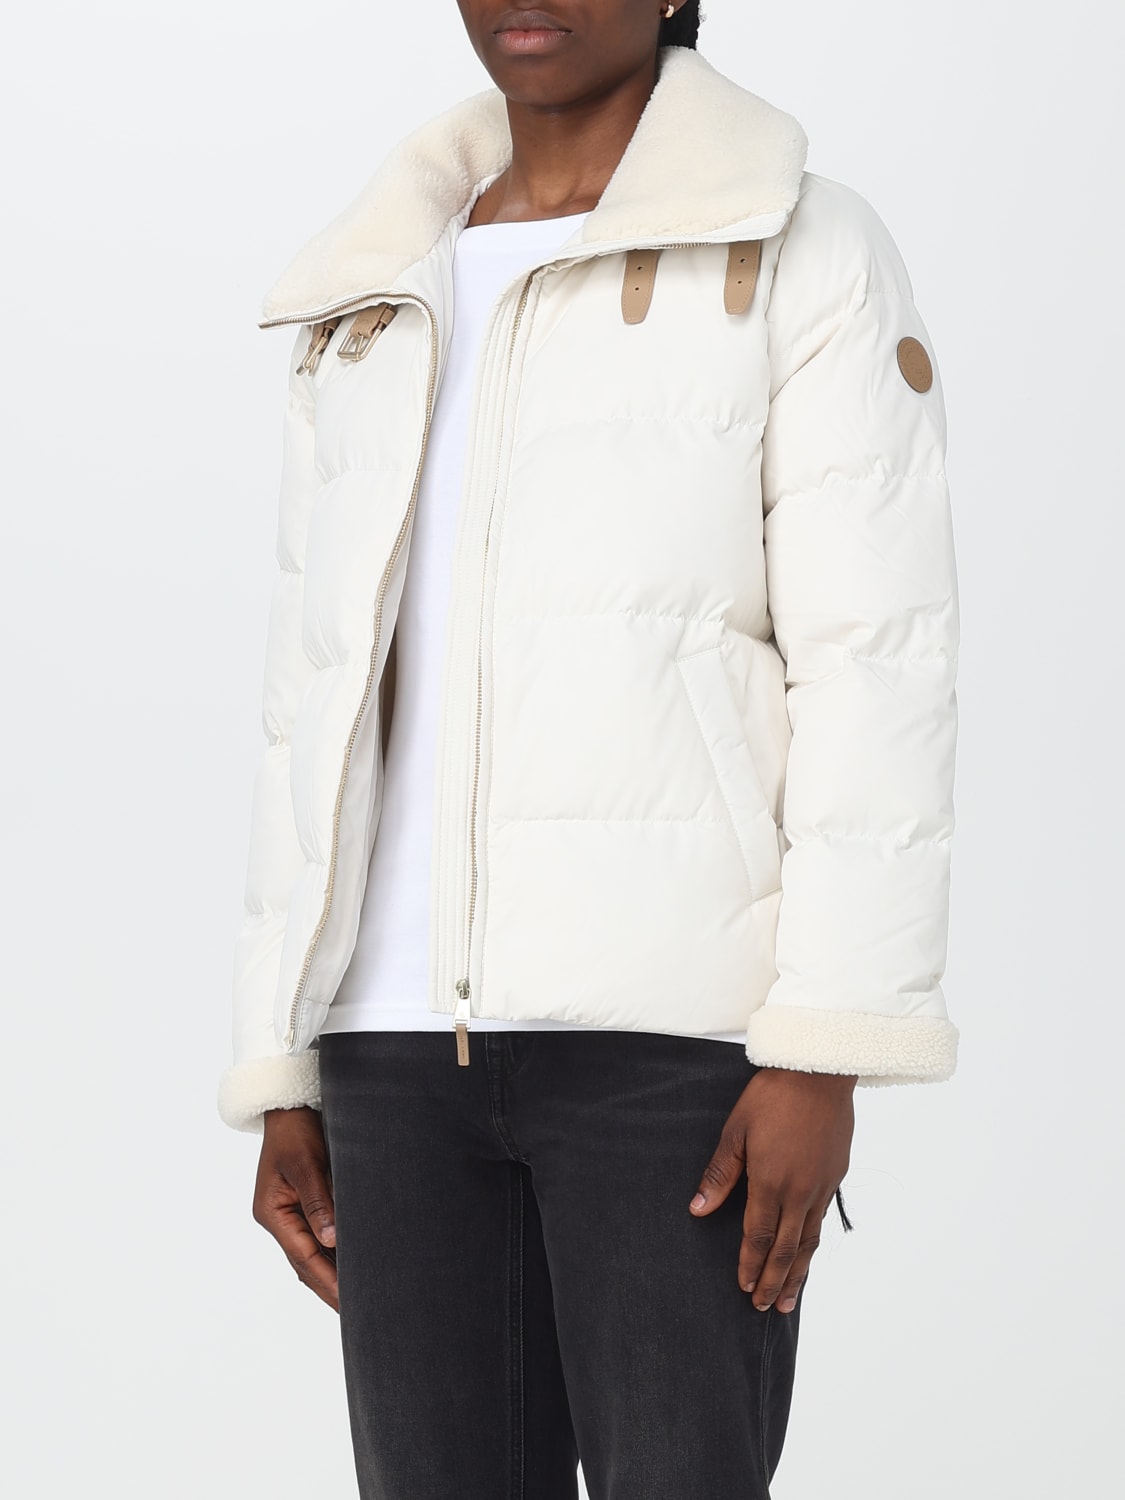 Women's Lauren Ralph Lauren Puffer Jackets & Down Coats